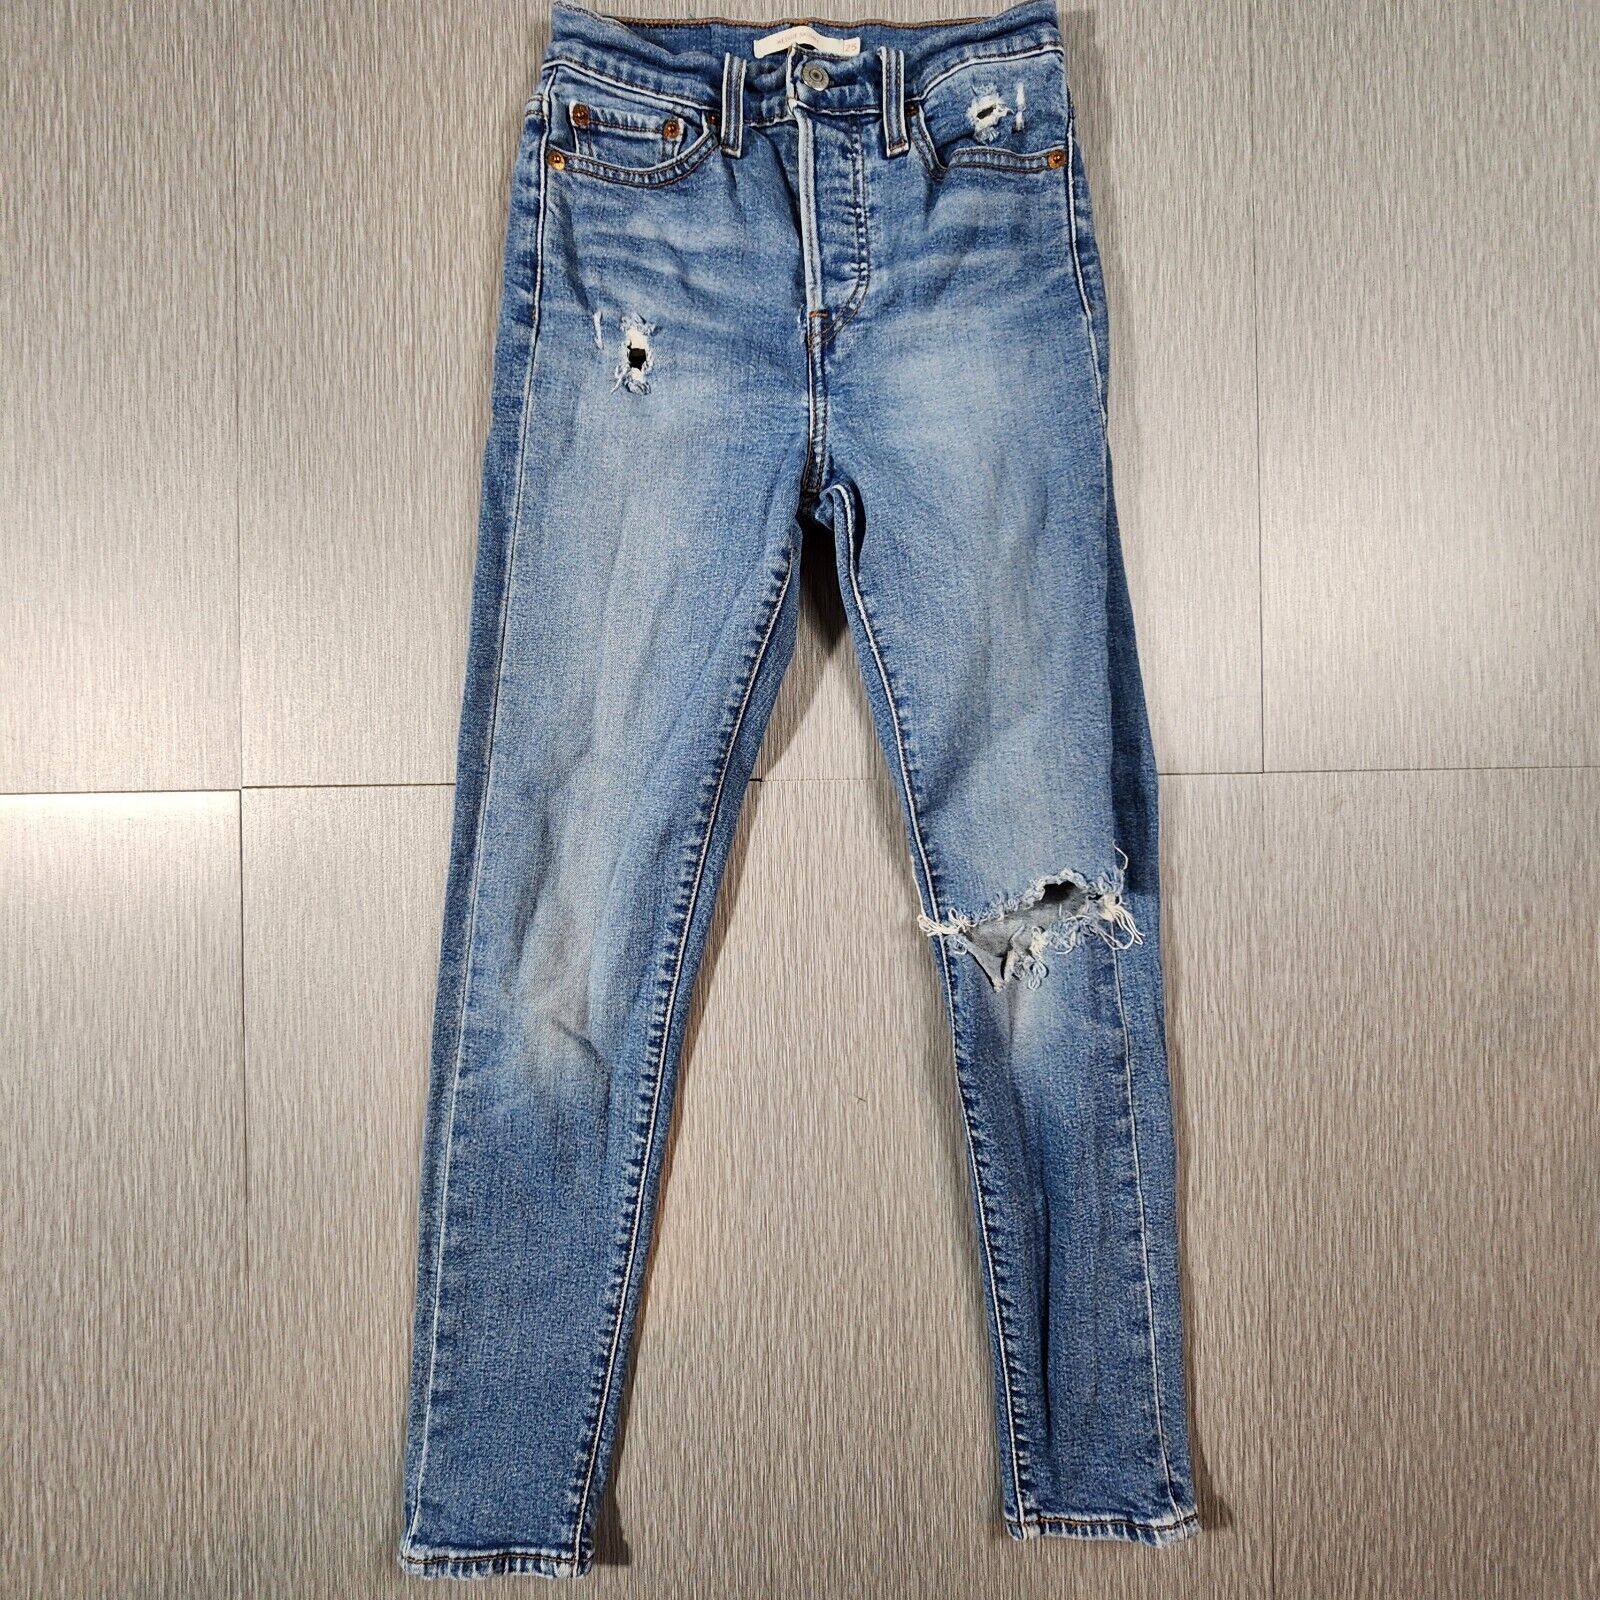 Levis Womens Jeans 25 Blue Wedgie Premium Quality Button Fly Medium Wash Denim